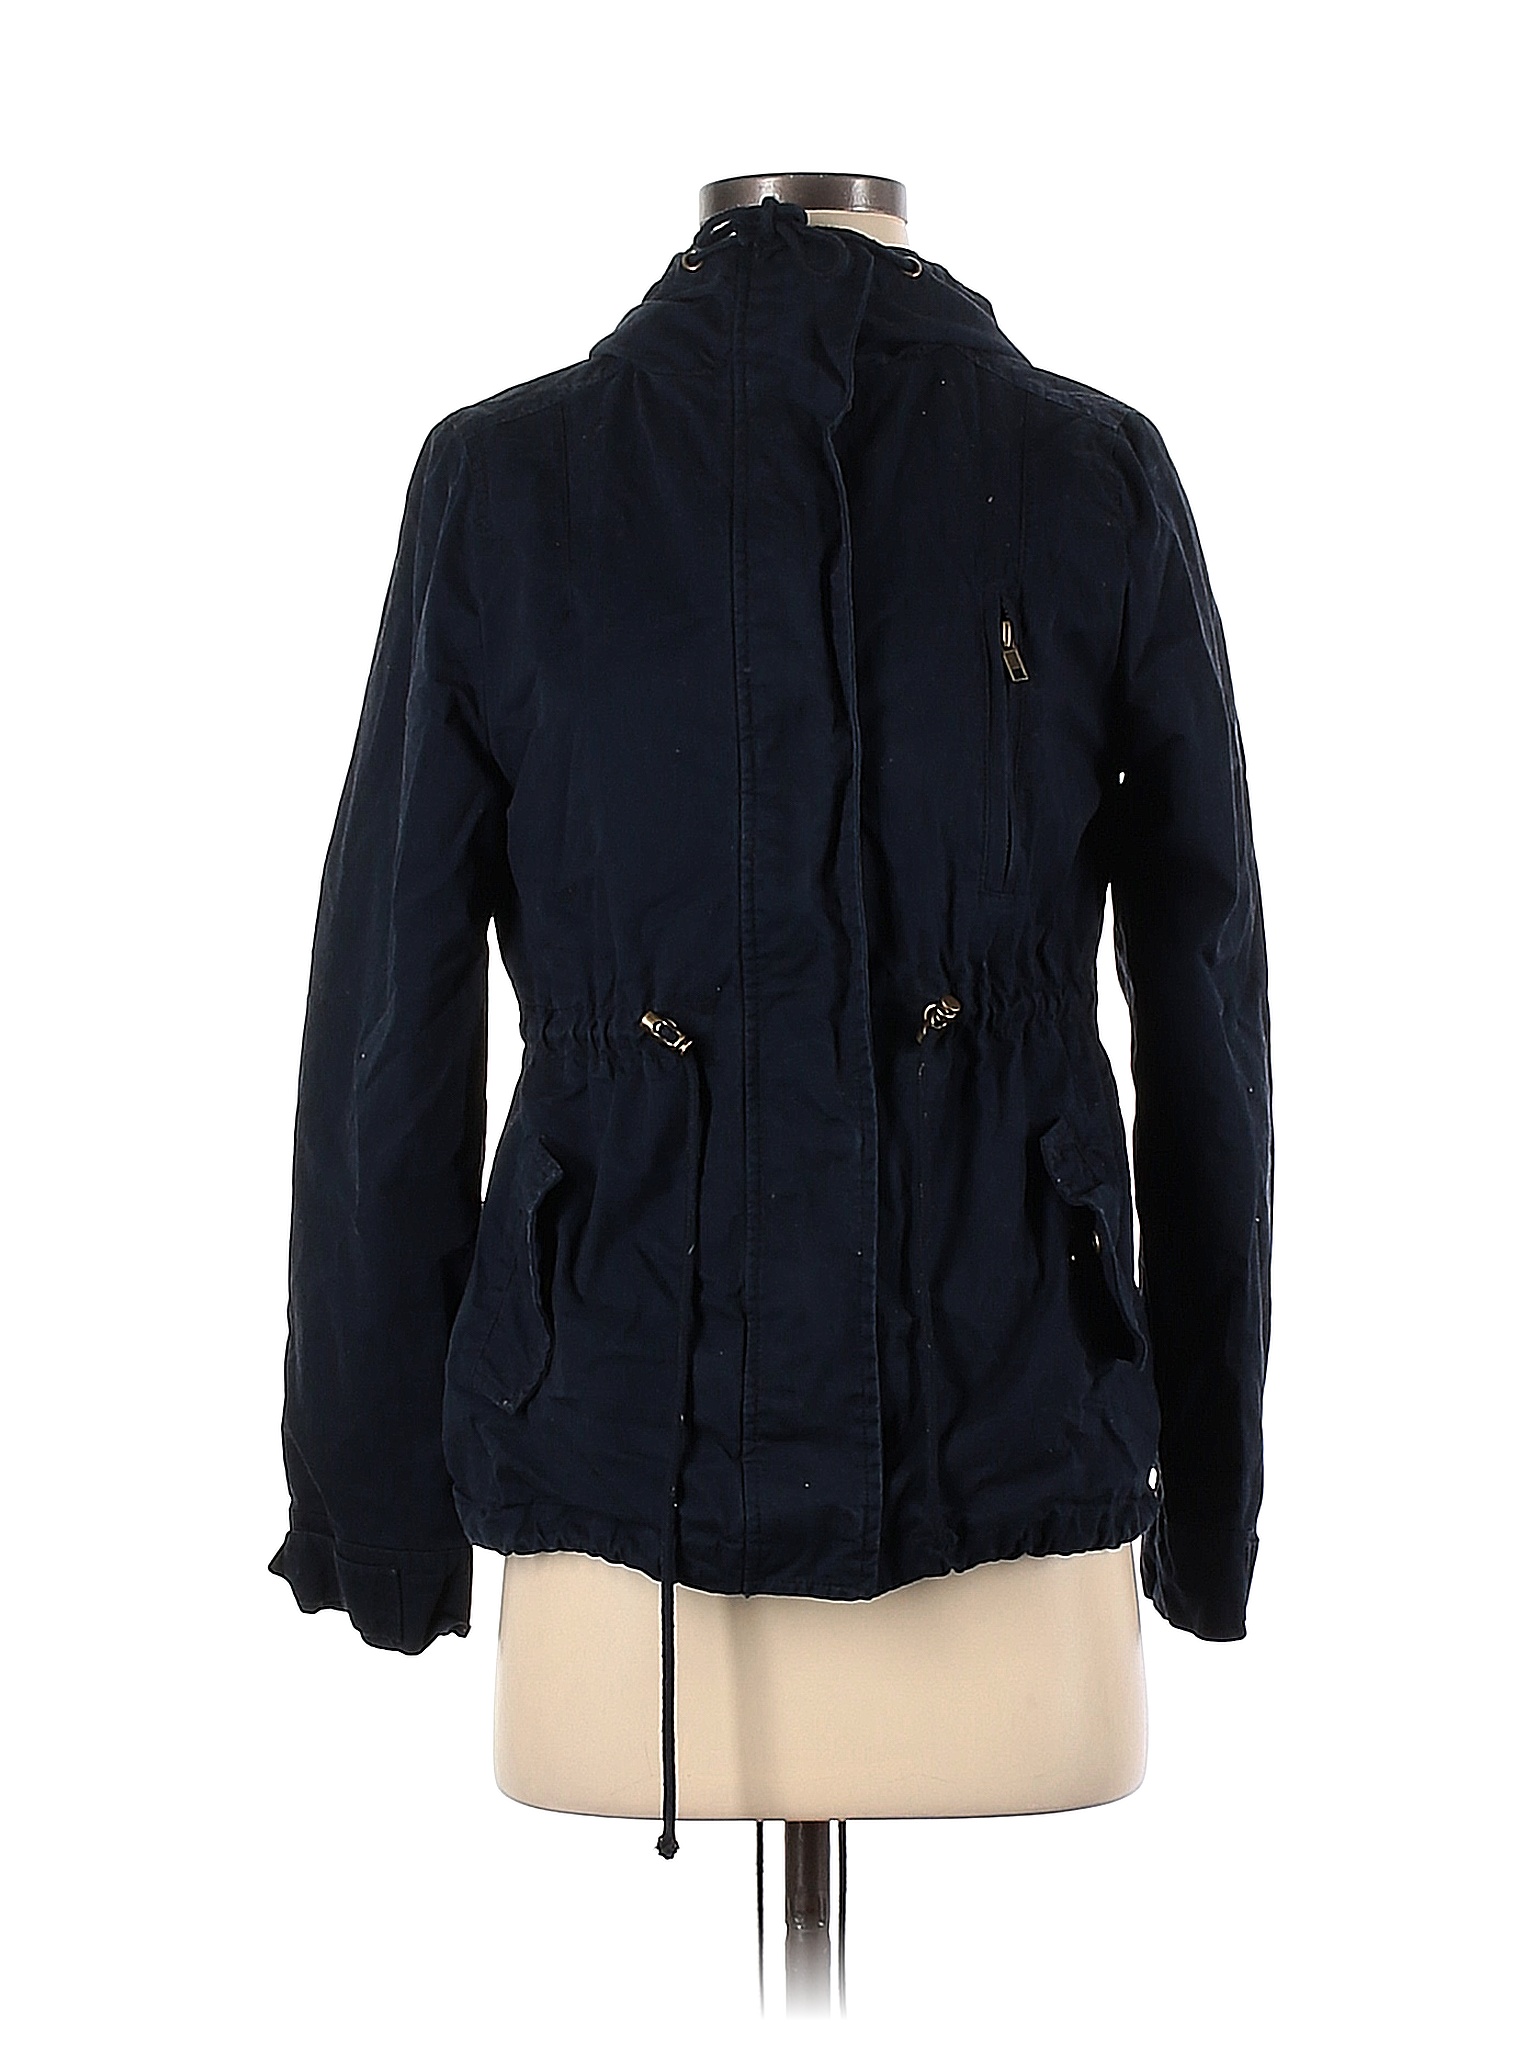 Assorted Brands 100% Cotton Solid Blue Jacket Size S - 84% off | ThredUp